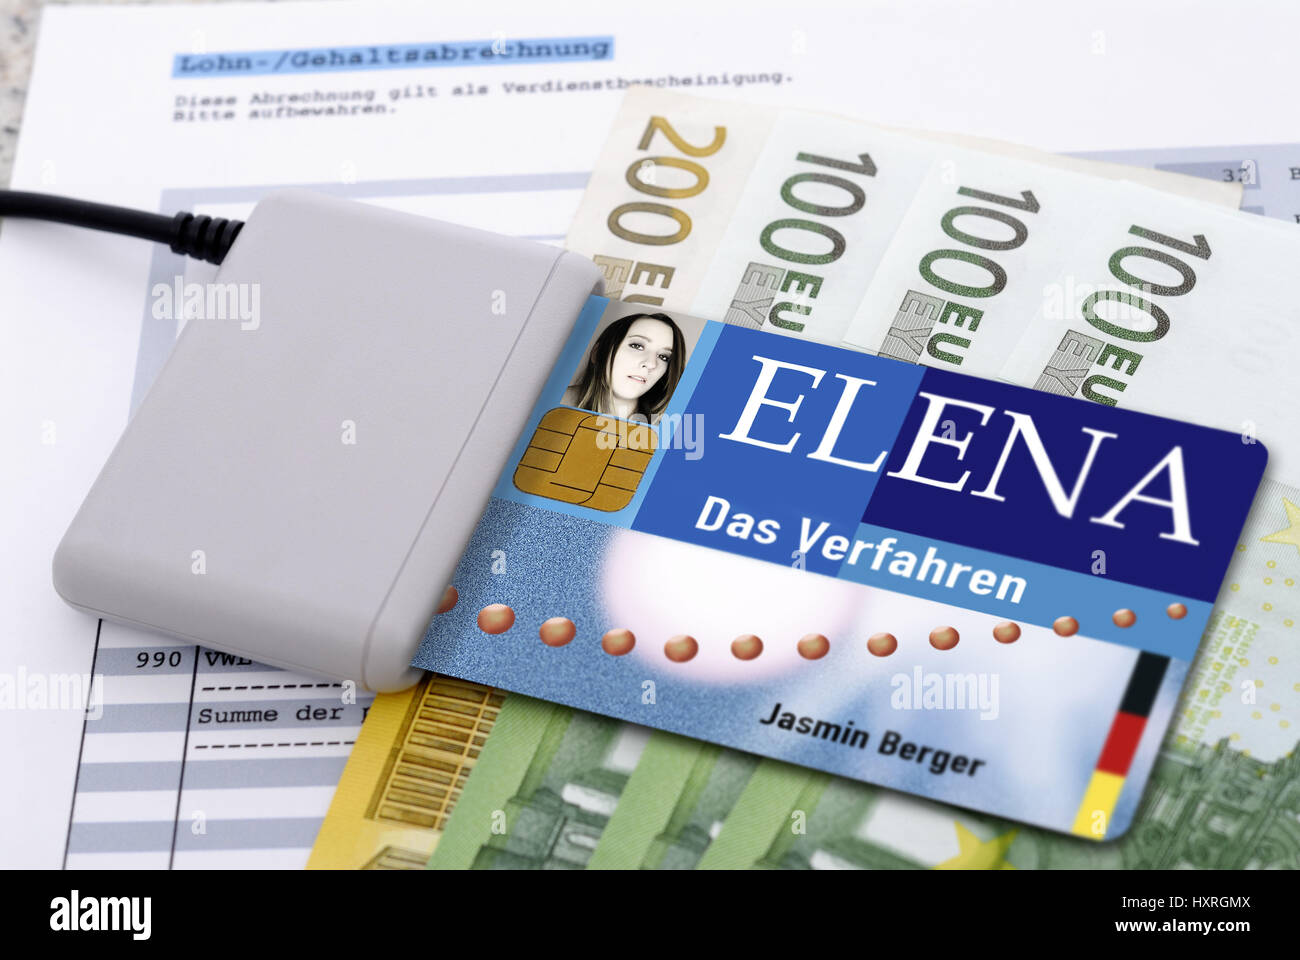 Elena, electronic income proof (picture assembly), elektronischer Einkommensnachweis (Bildmontage) Stock Photo